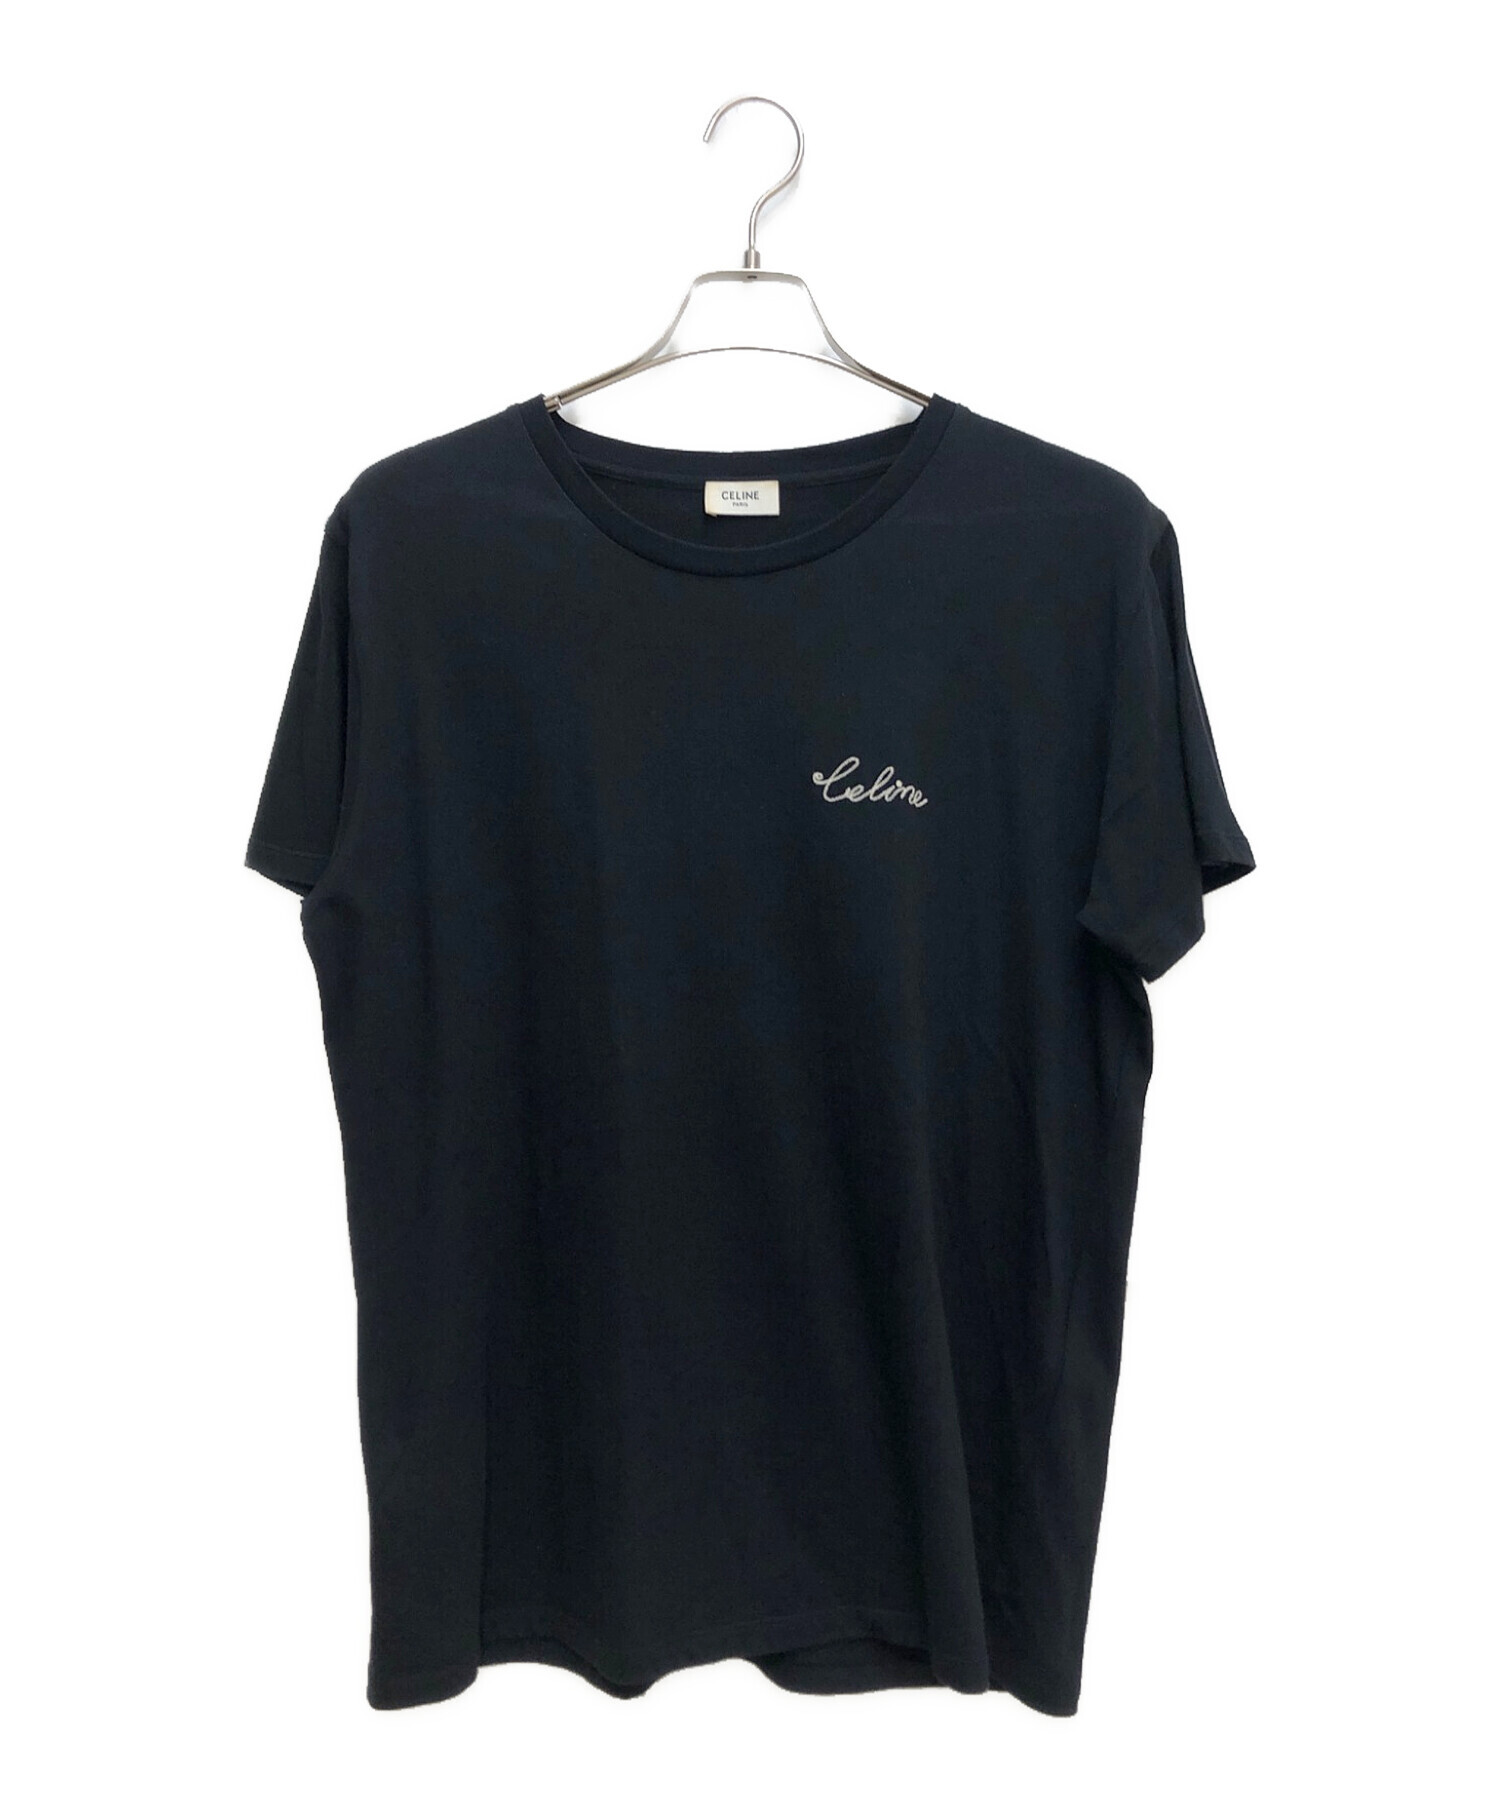 CELINE (セリーヌ) ロゴ刺繍Tシャツ ブラック サイズ:M